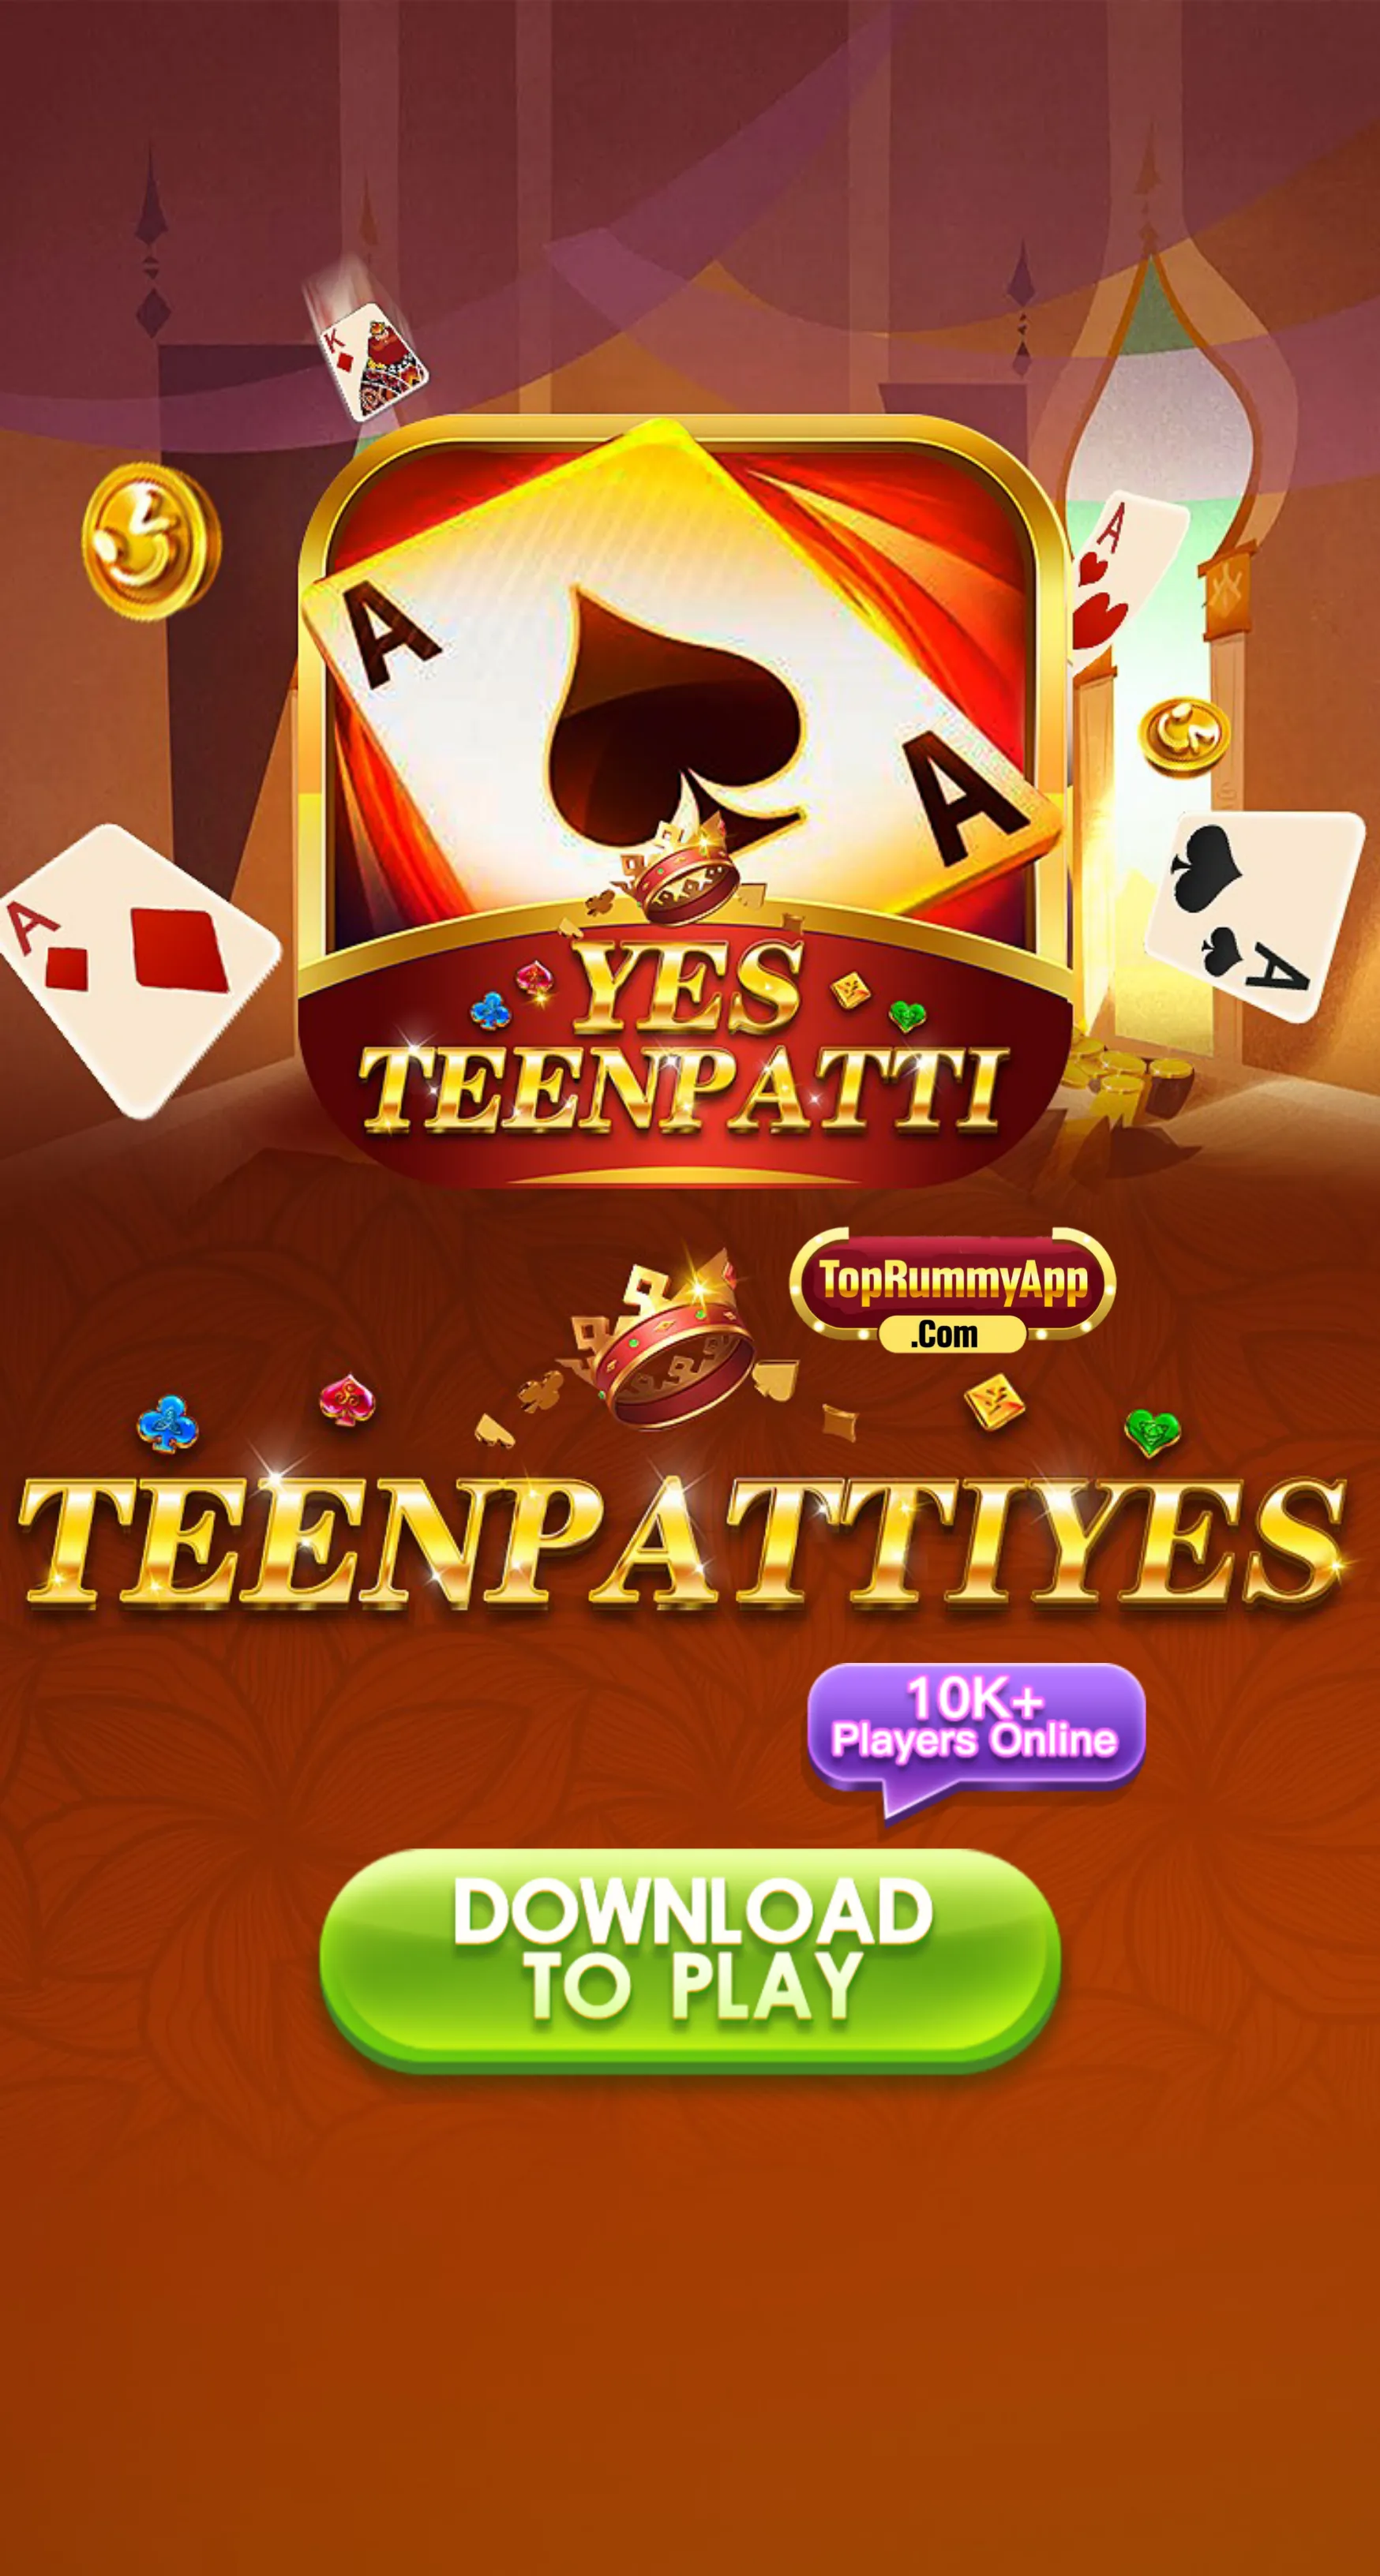 Teen Patti Yes Apk Download - Top Rummy App List